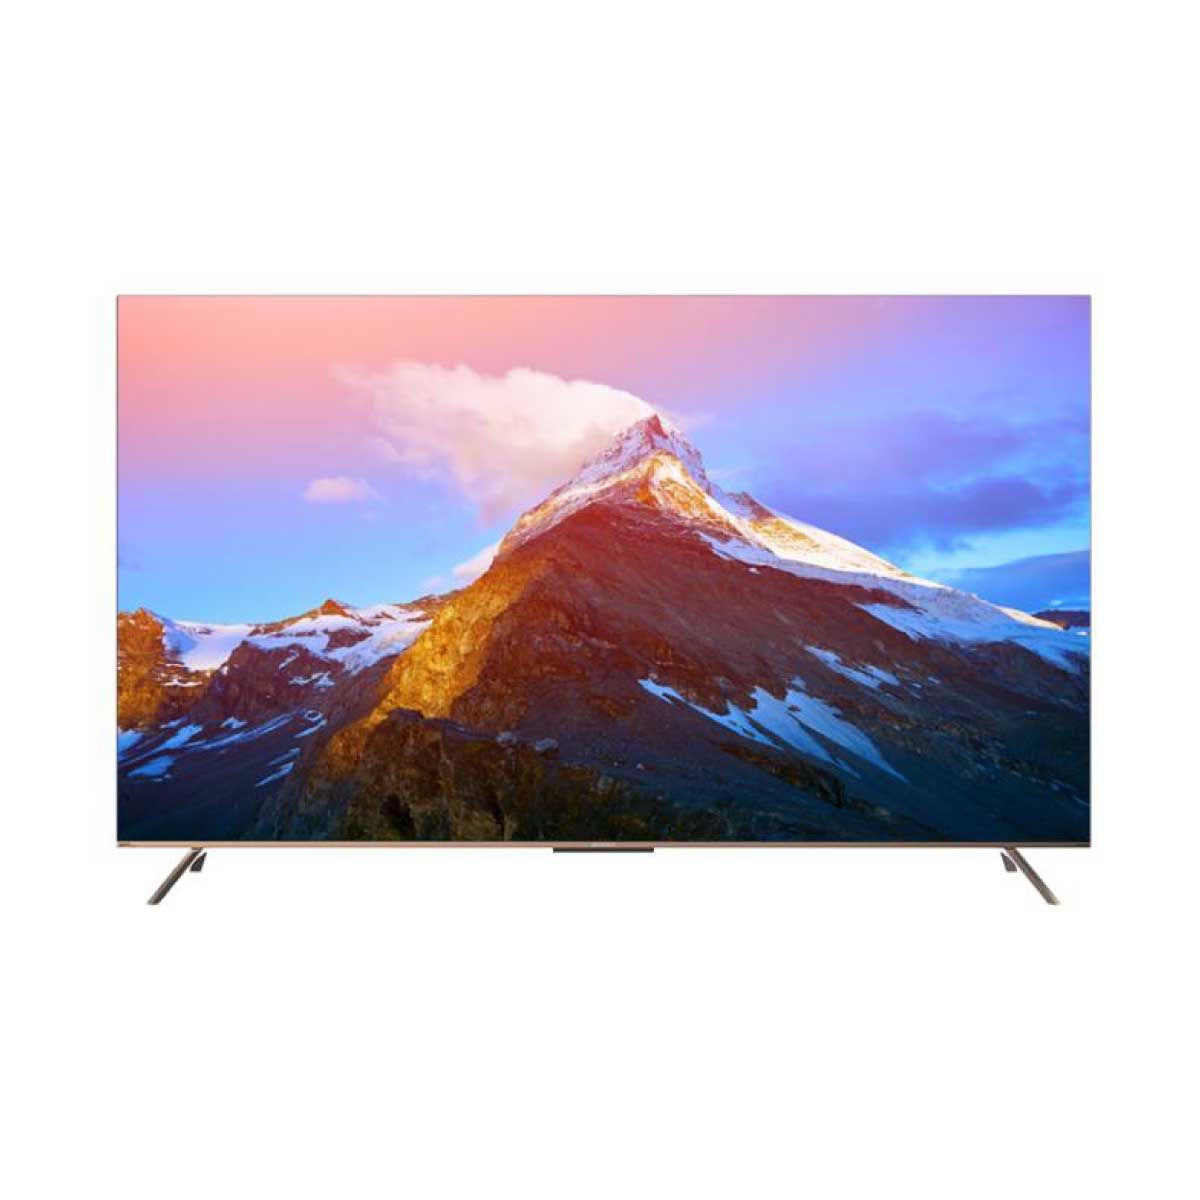 SKYWORTH LED Google TV 4K รุ่น 86SUE7600 120HZ สมาร์ททีวี ขนาด 86 นิ้ว